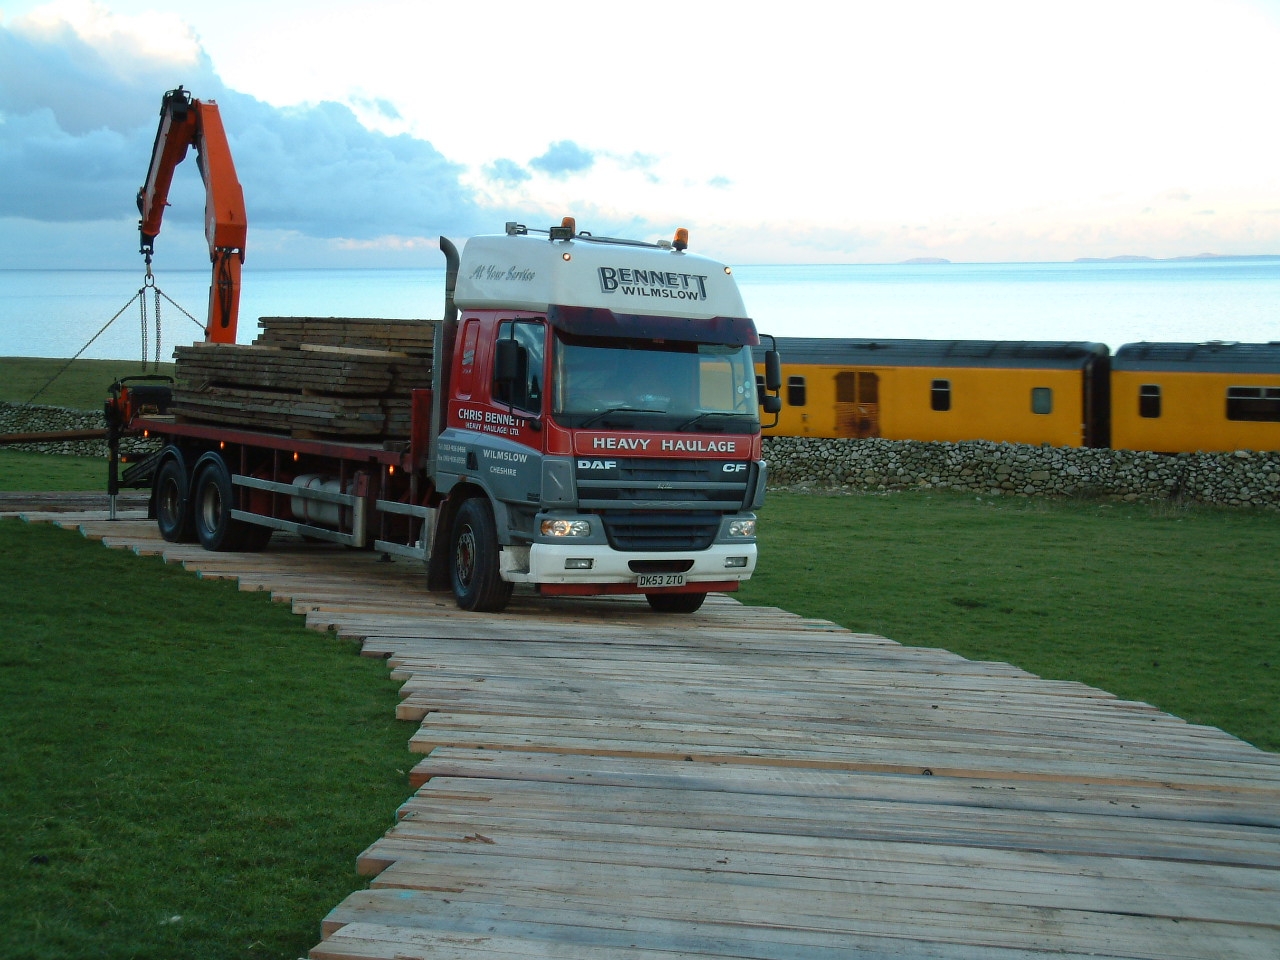 heavy haulage vehicle on temporary roadway